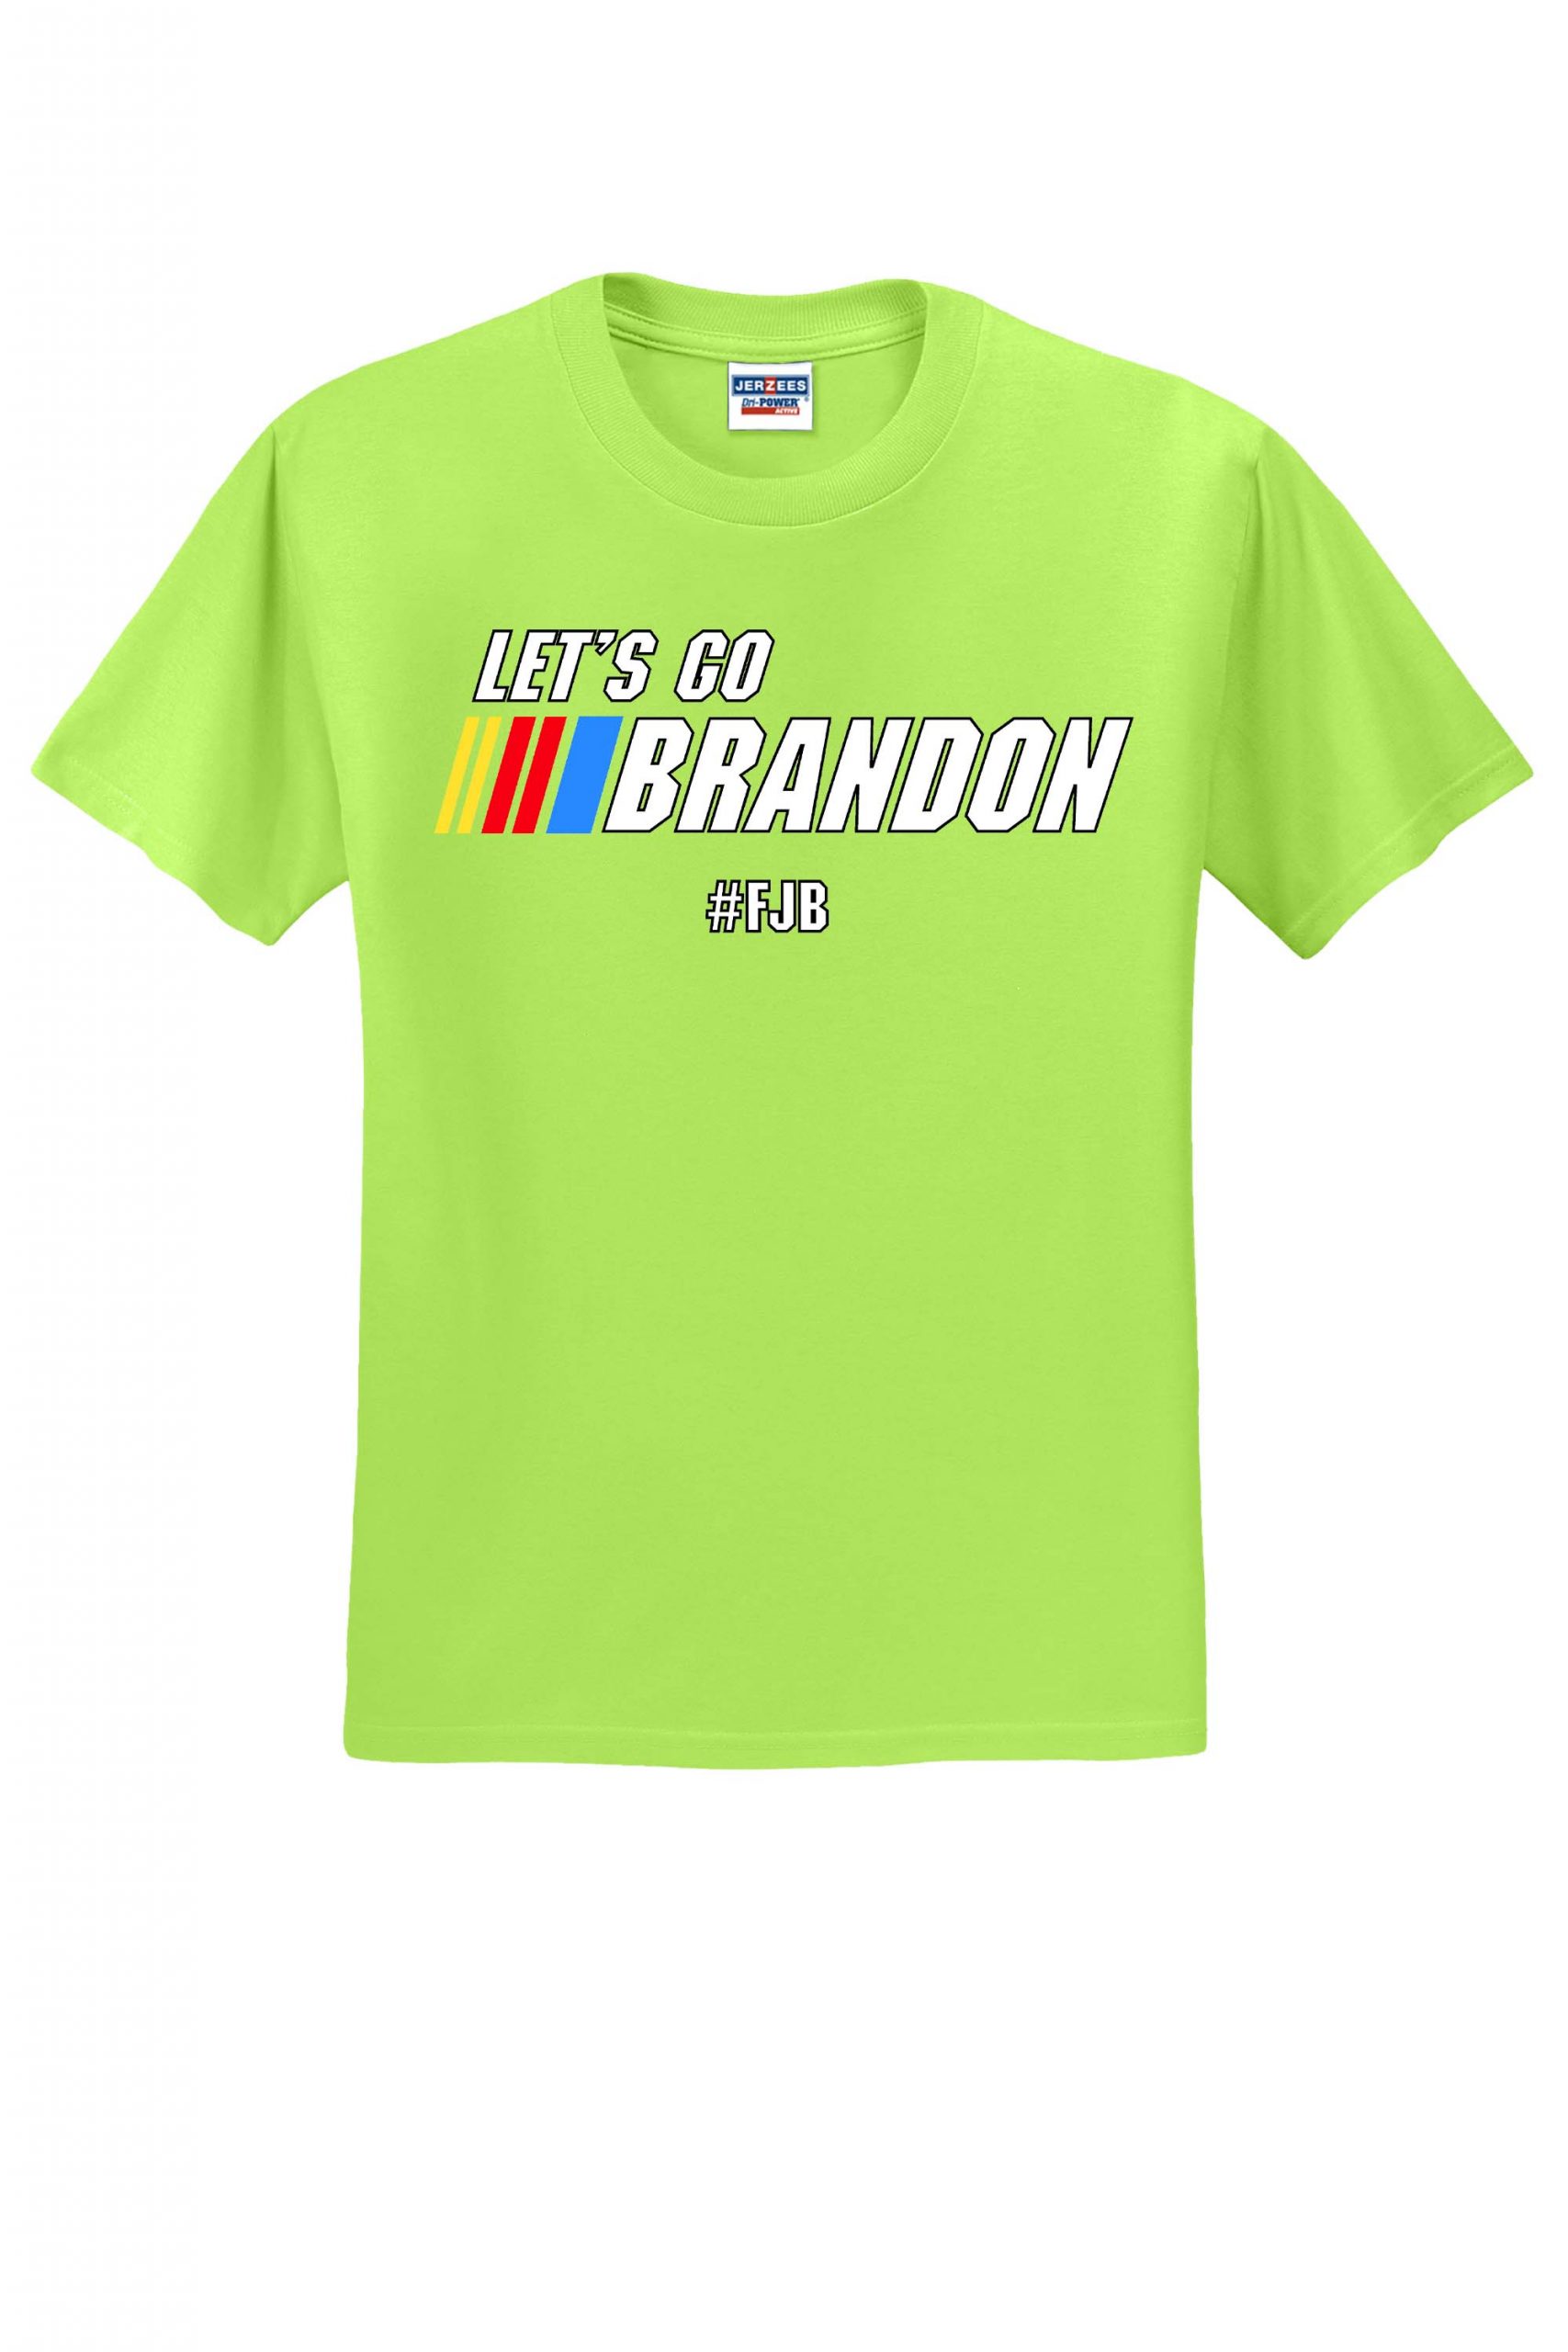 Lets Go Brandon NASCAR Flag - Sik-Nastee Apparel Co.